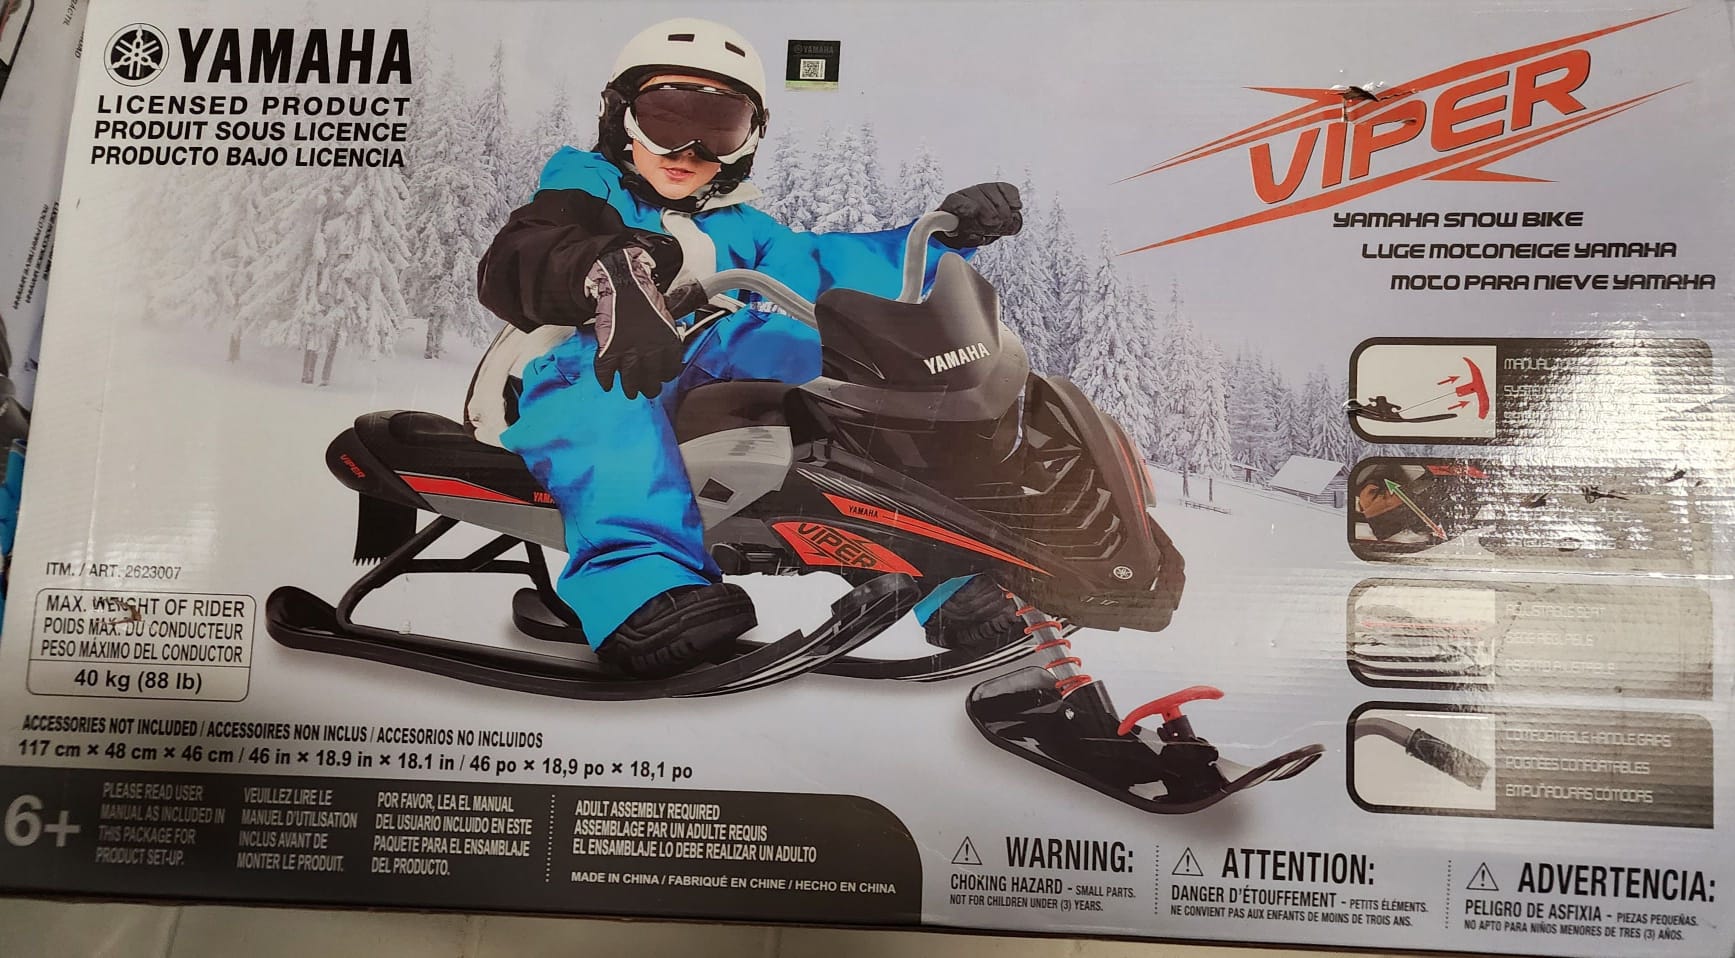 Yamaha Viper Snow Bike